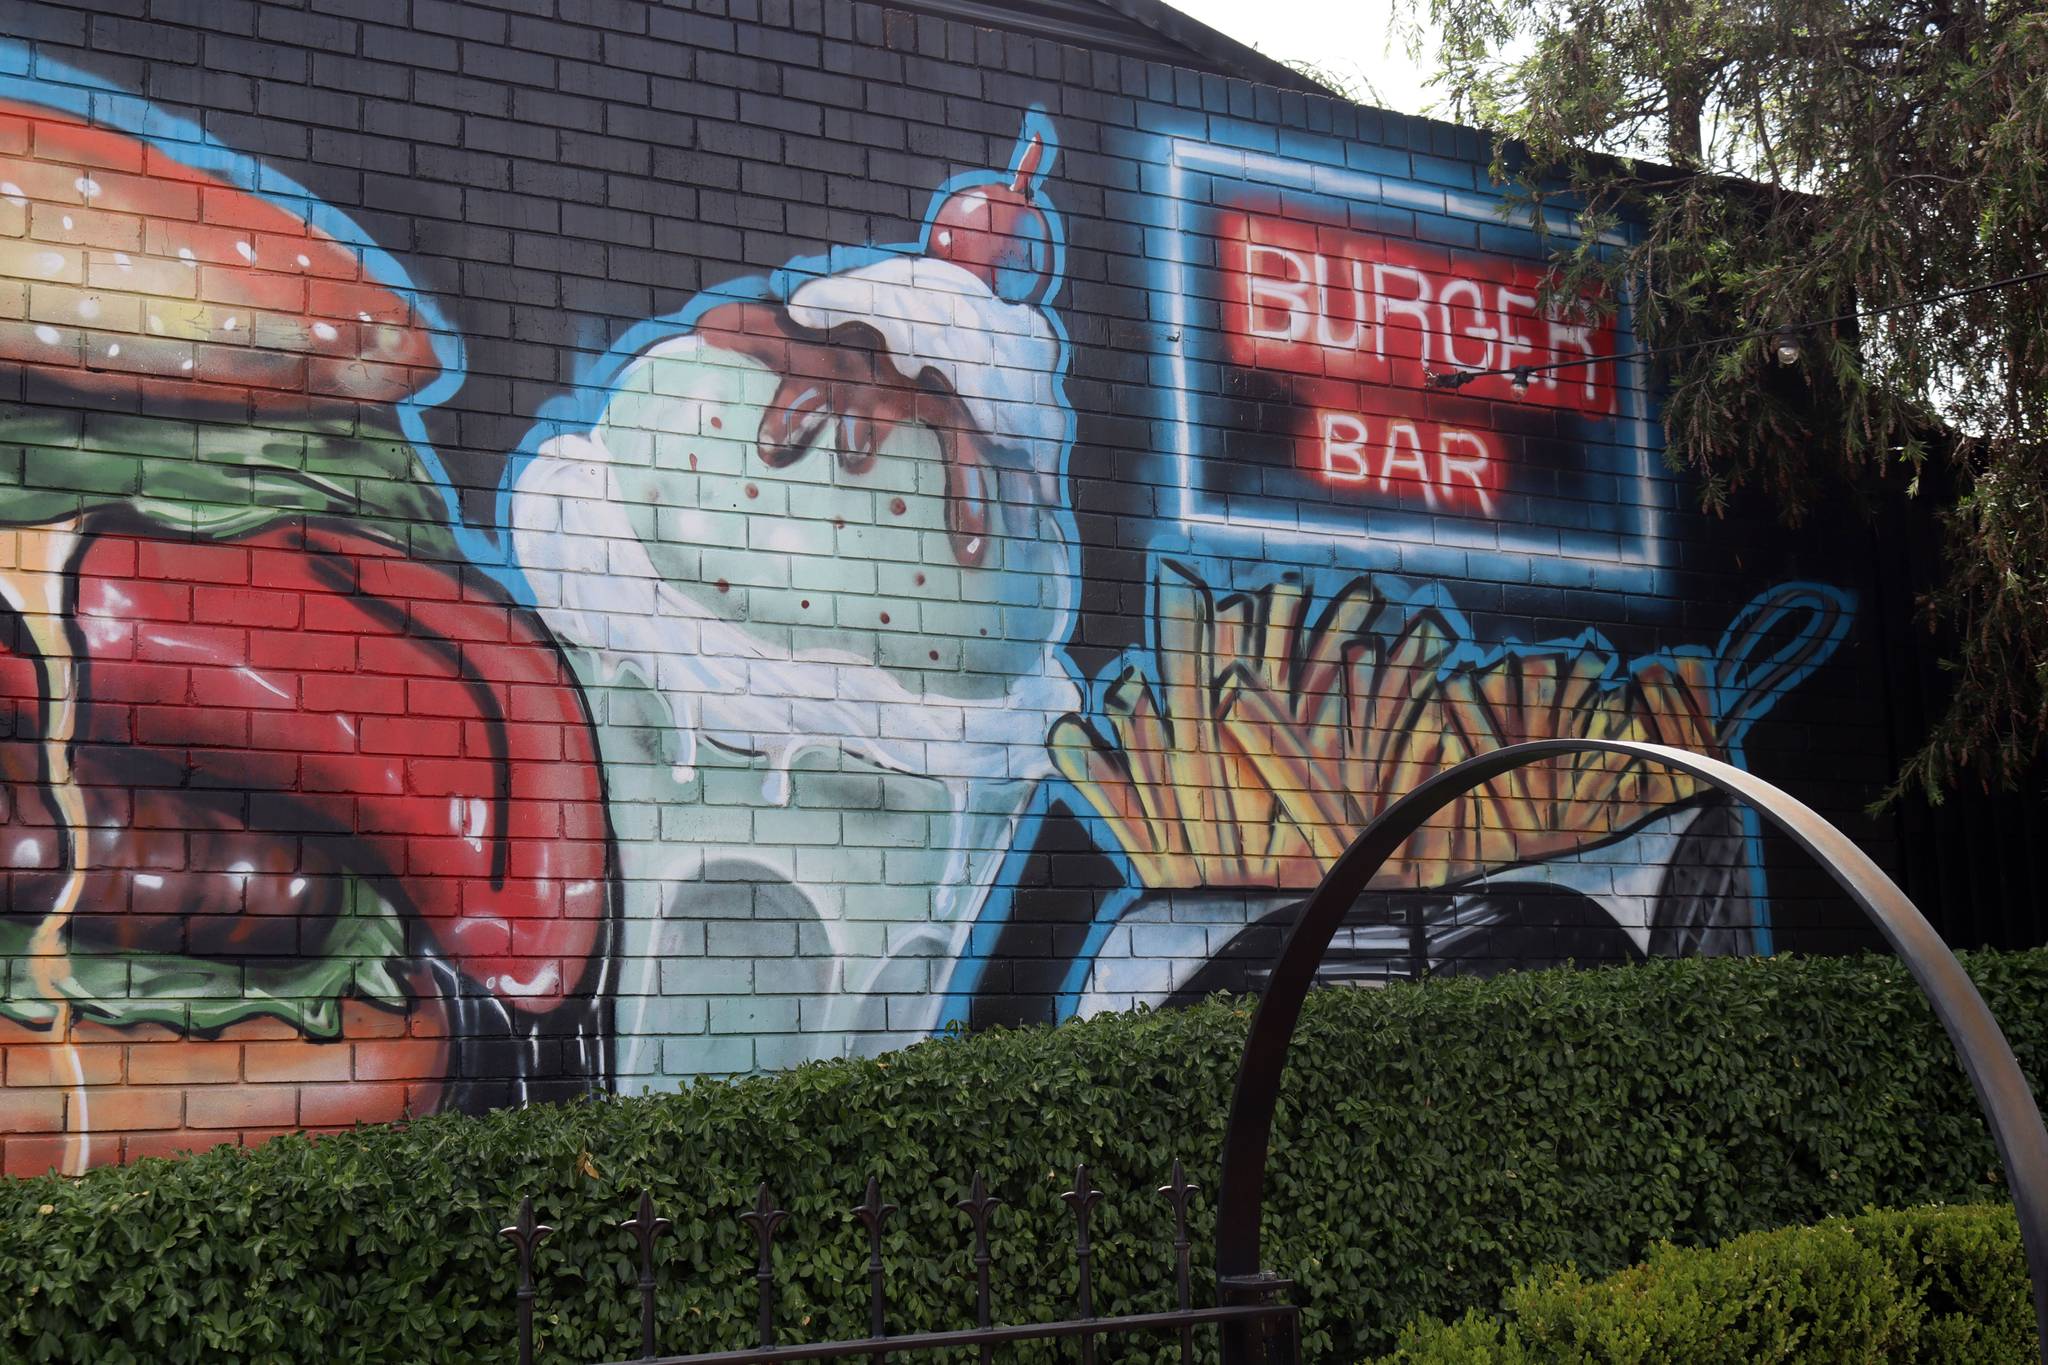 Shane Salvador&mdash;Williamsburg Burger Bar